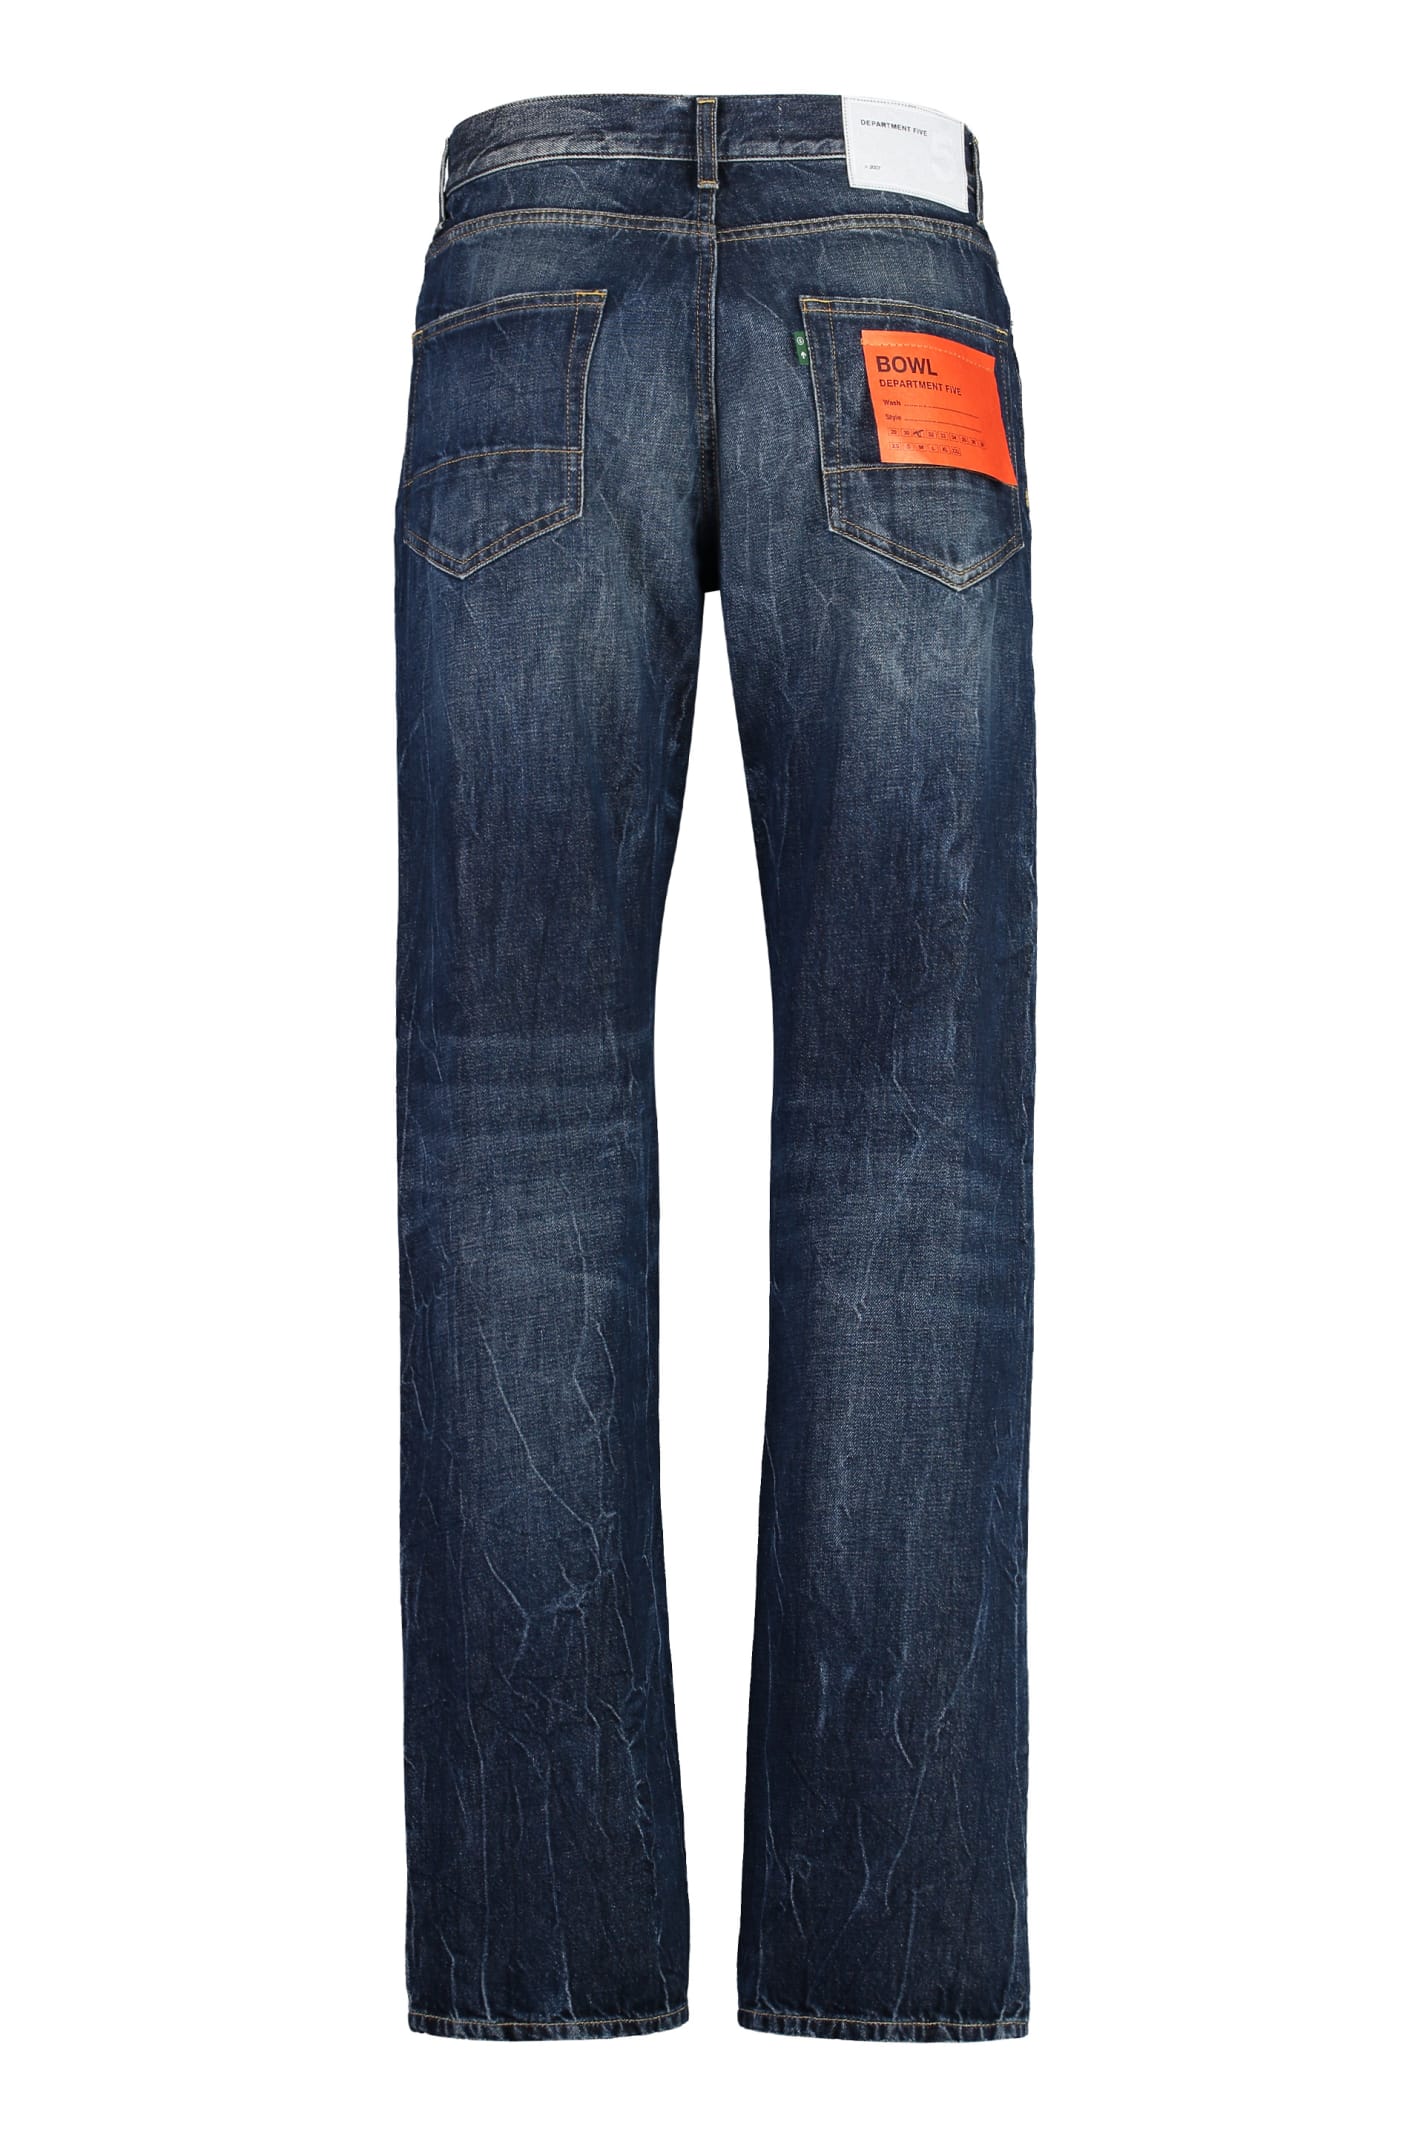 Shop Department Five Bowl 5-pocket Straight-leg Jeans In Denim